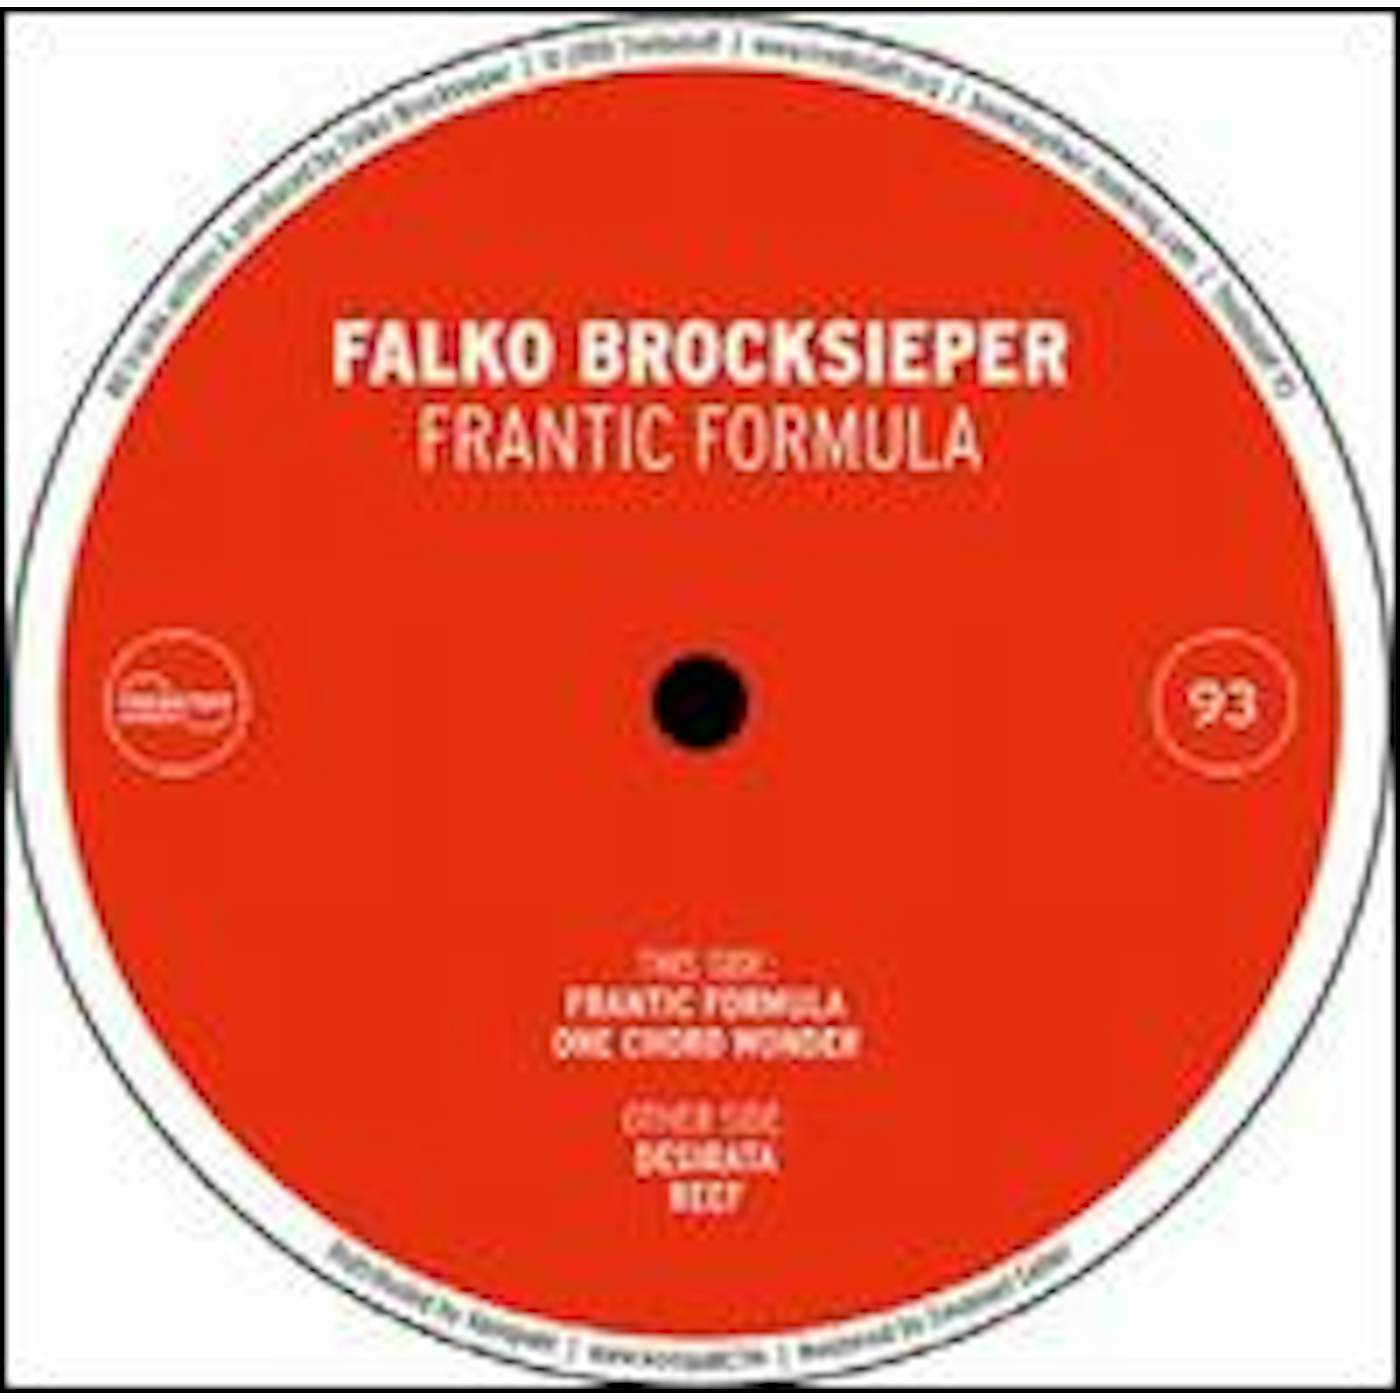 Falko Brocksieper Frantic Formula Vinyl Record